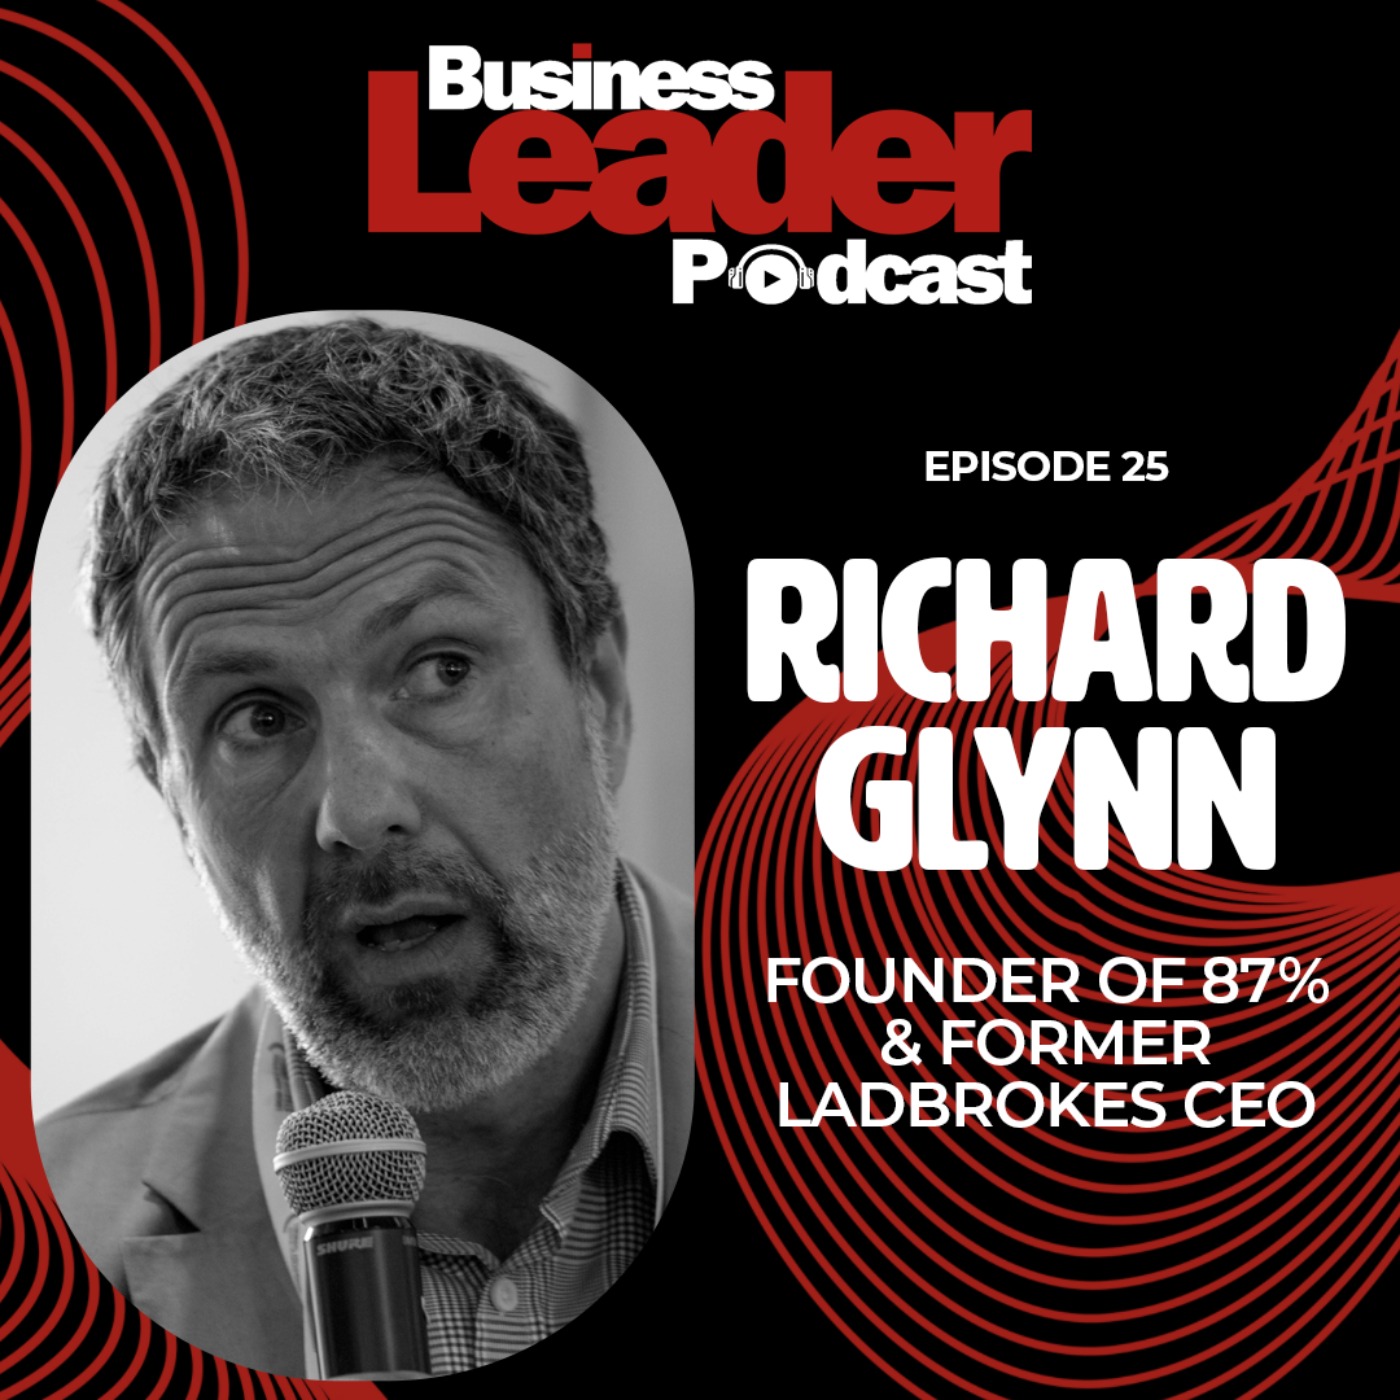 Richard Glynn: founder of 87% & former Ladbrokes CEO